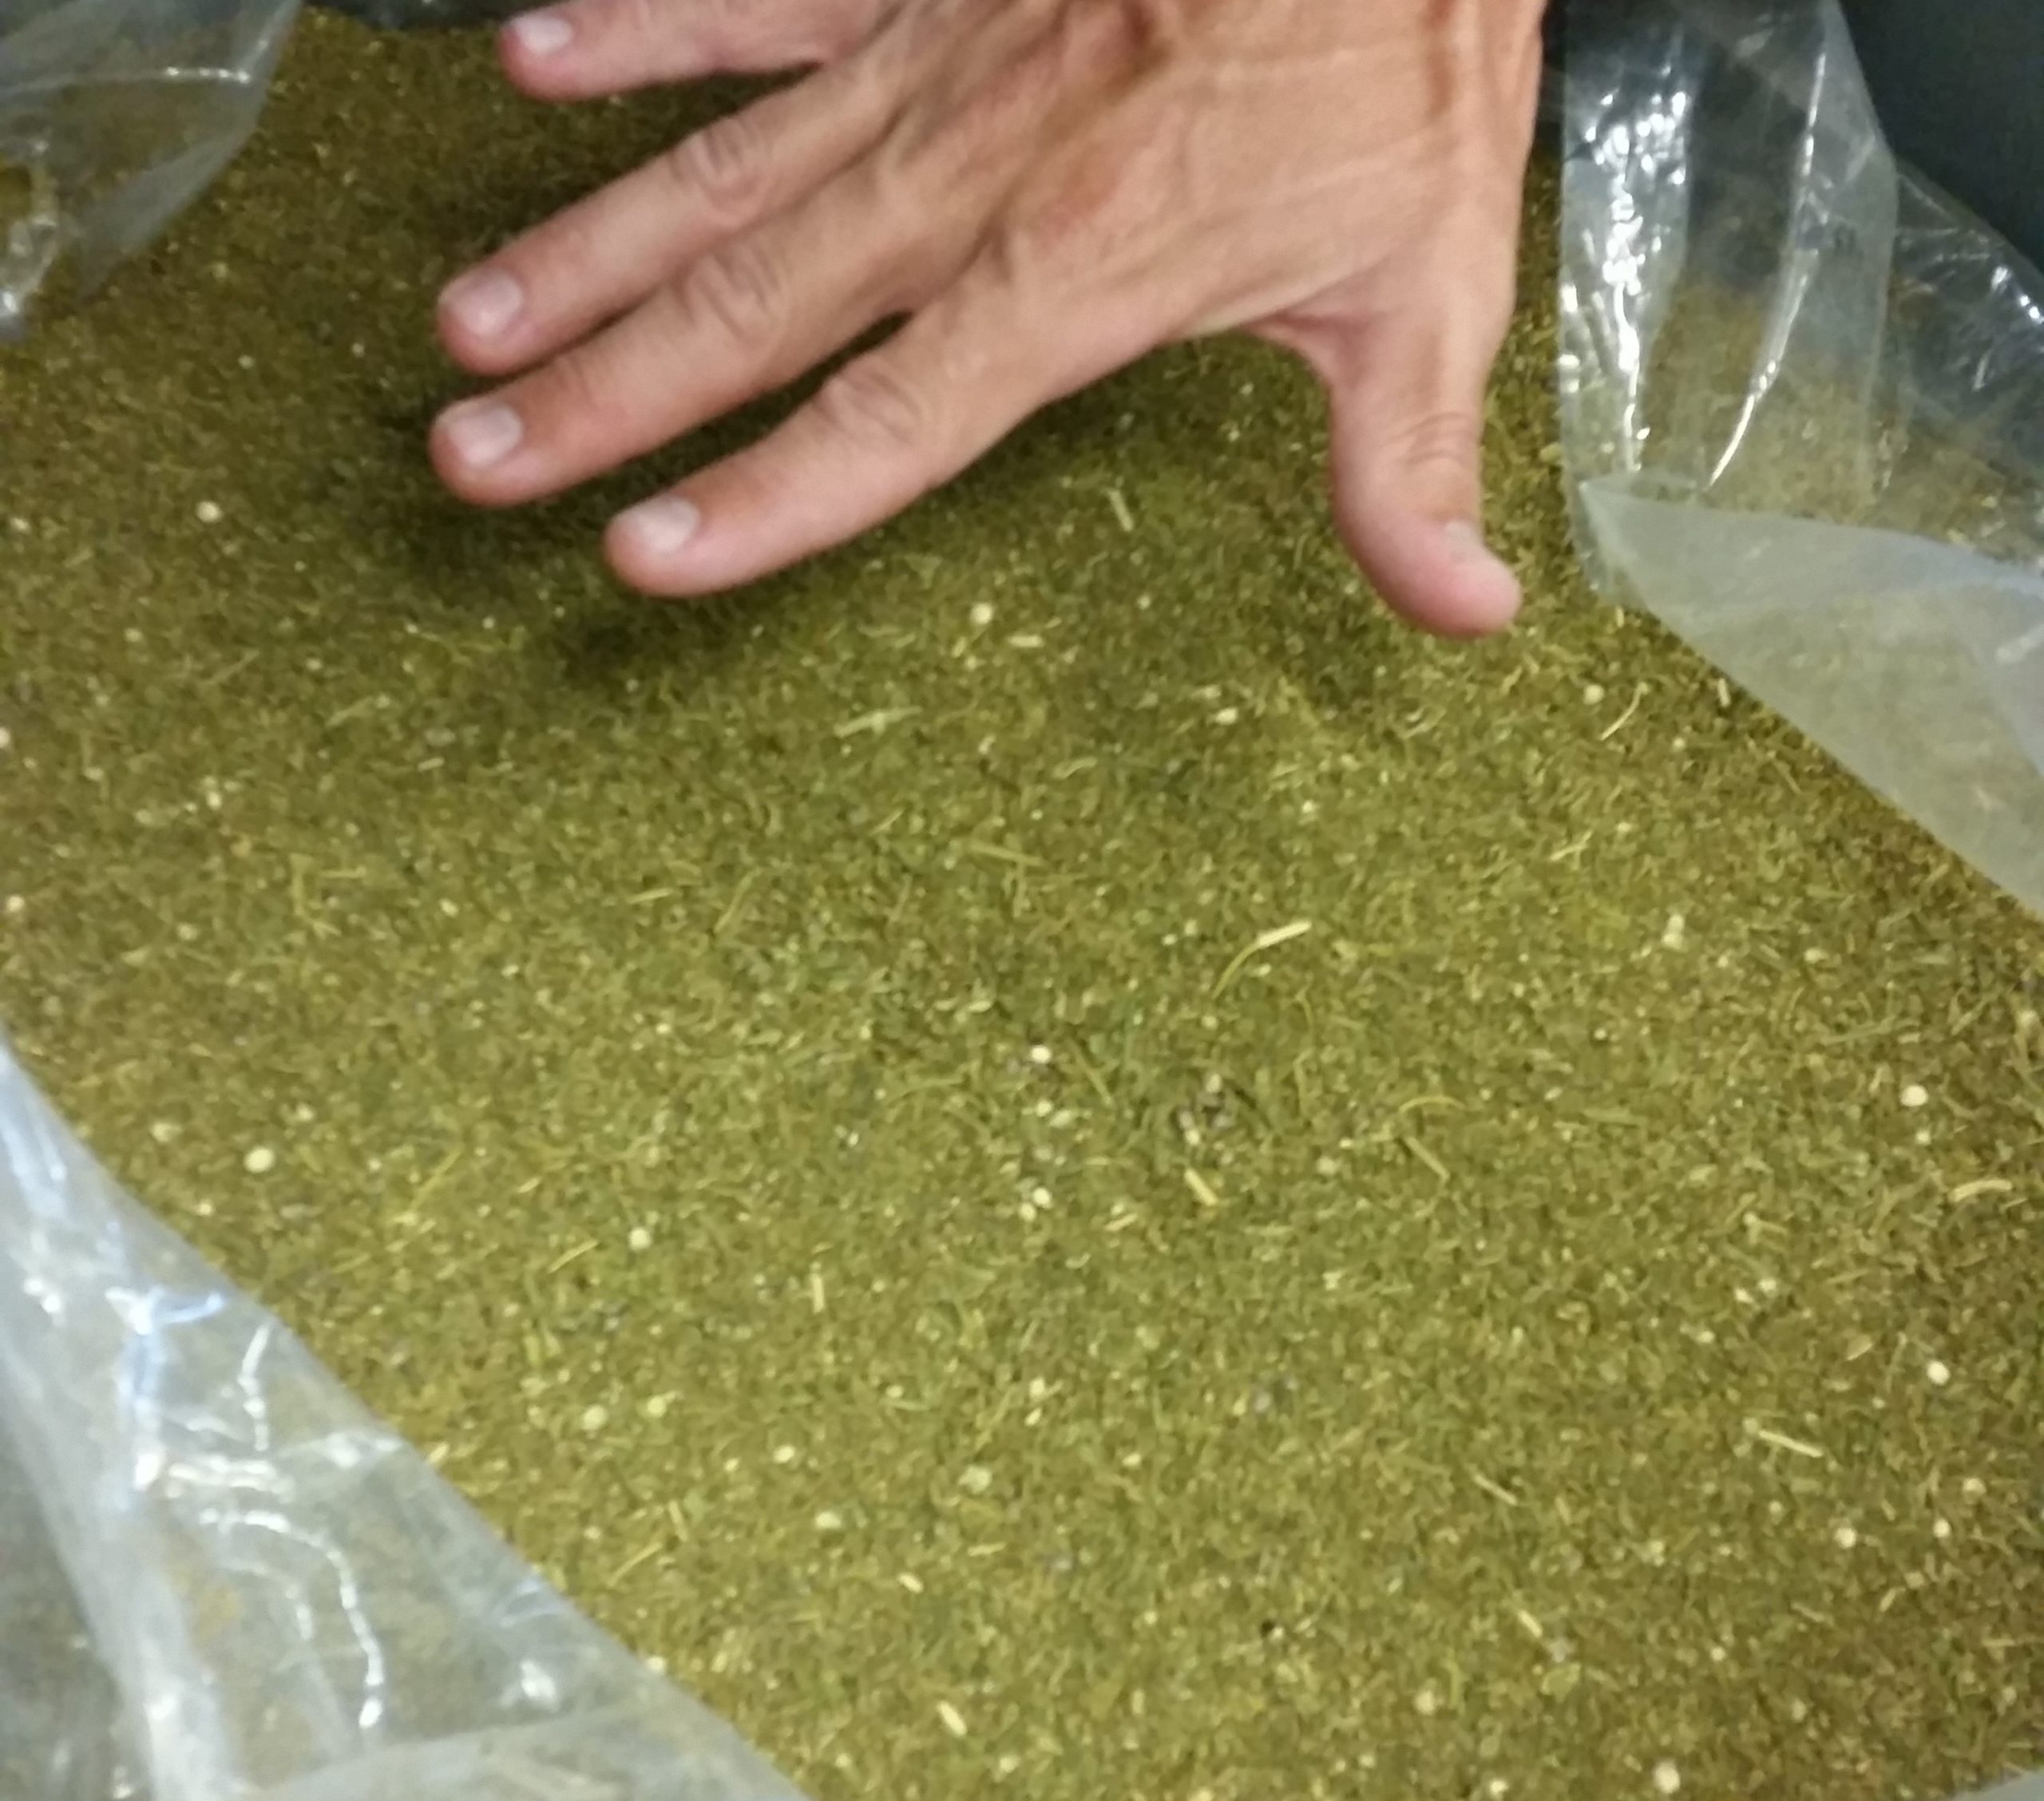 cannabis grinding